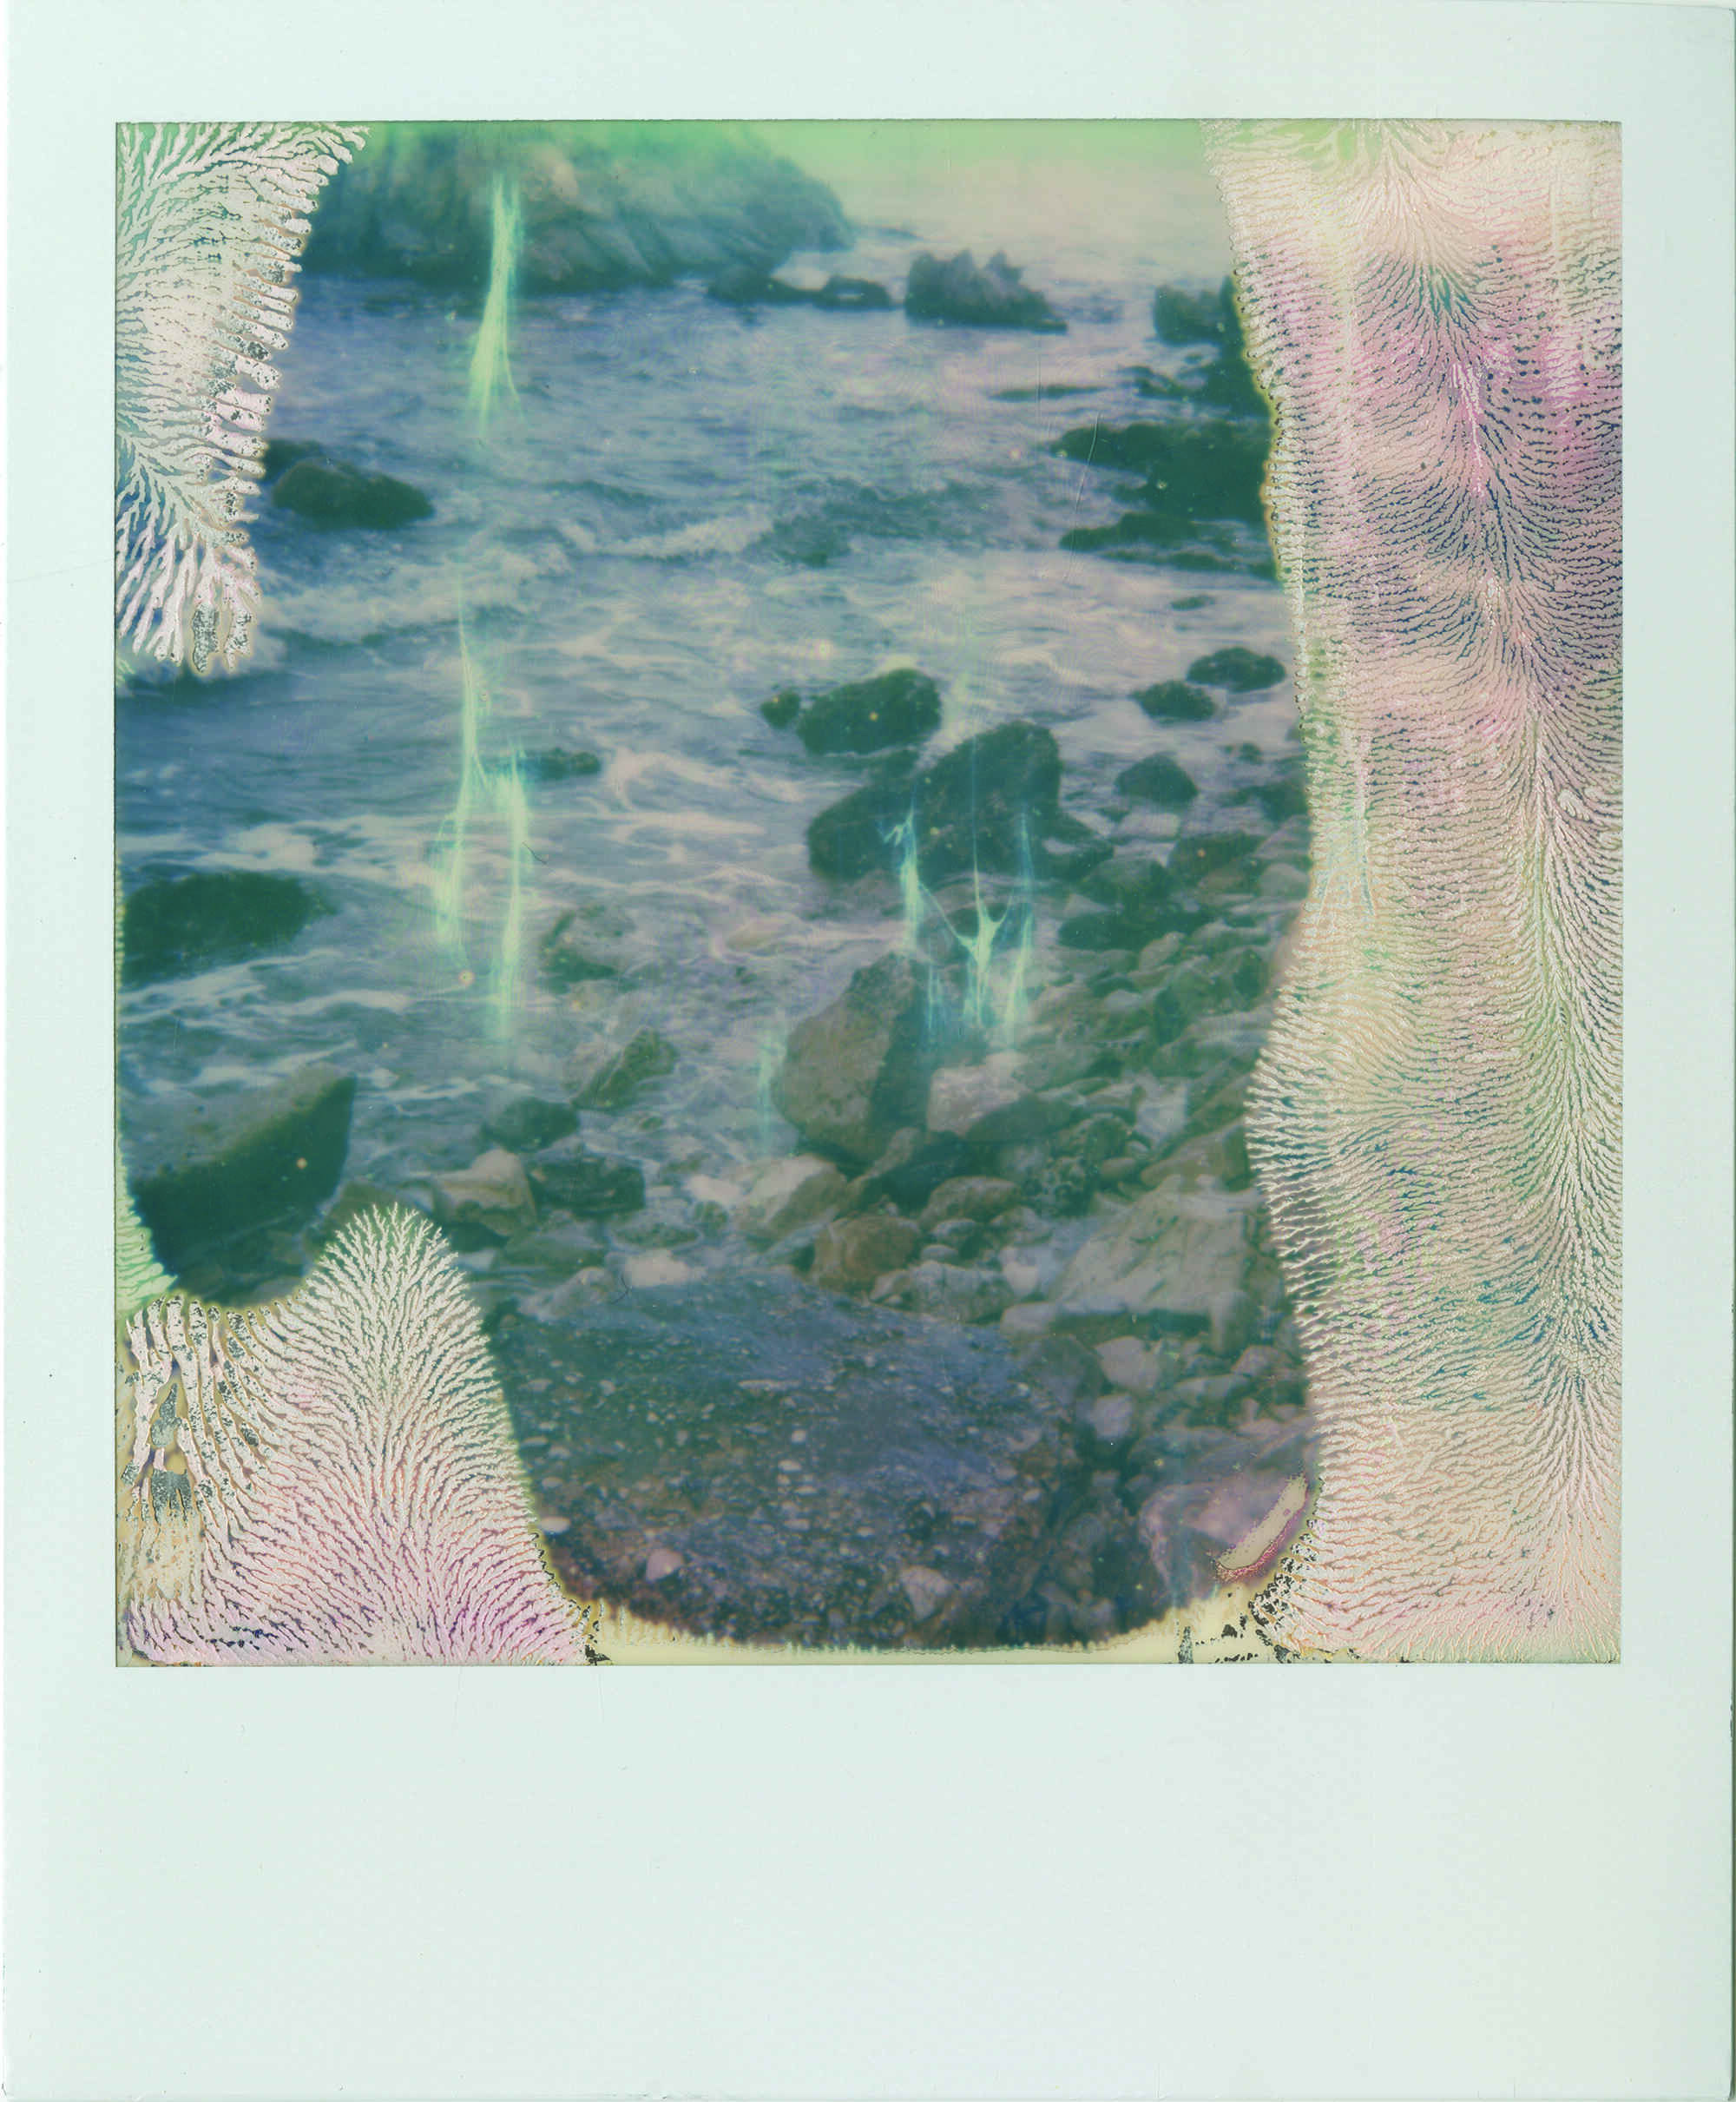 Untitled, Marseille #1, 2018, Polaroid, 4.25 x 3.5inches